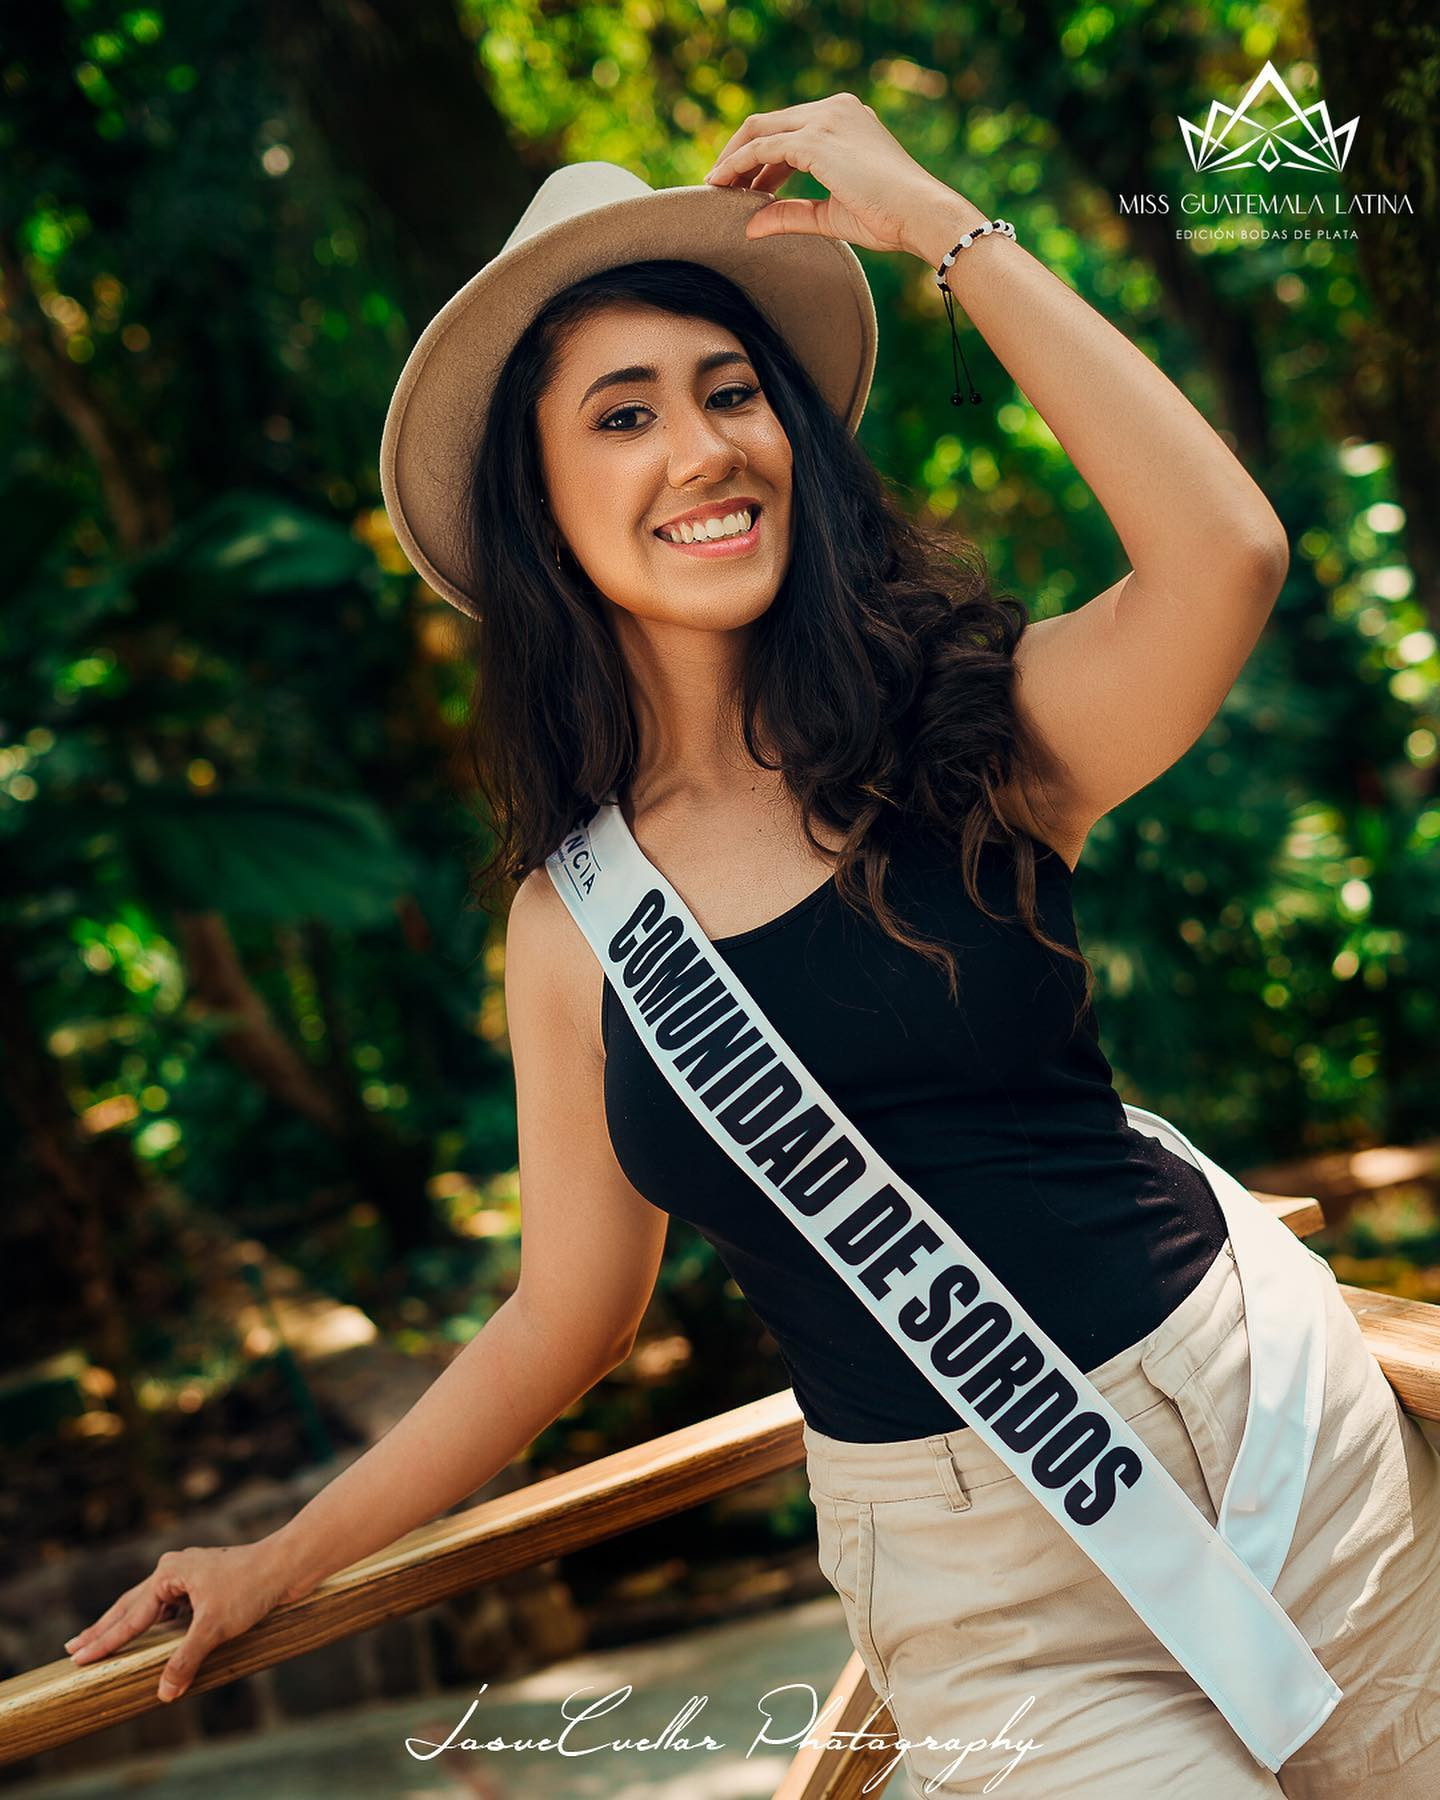 guatemala - candidatas a miss guatemala latina 2021. final: 30 de abril. - Página 7 BFjkRn